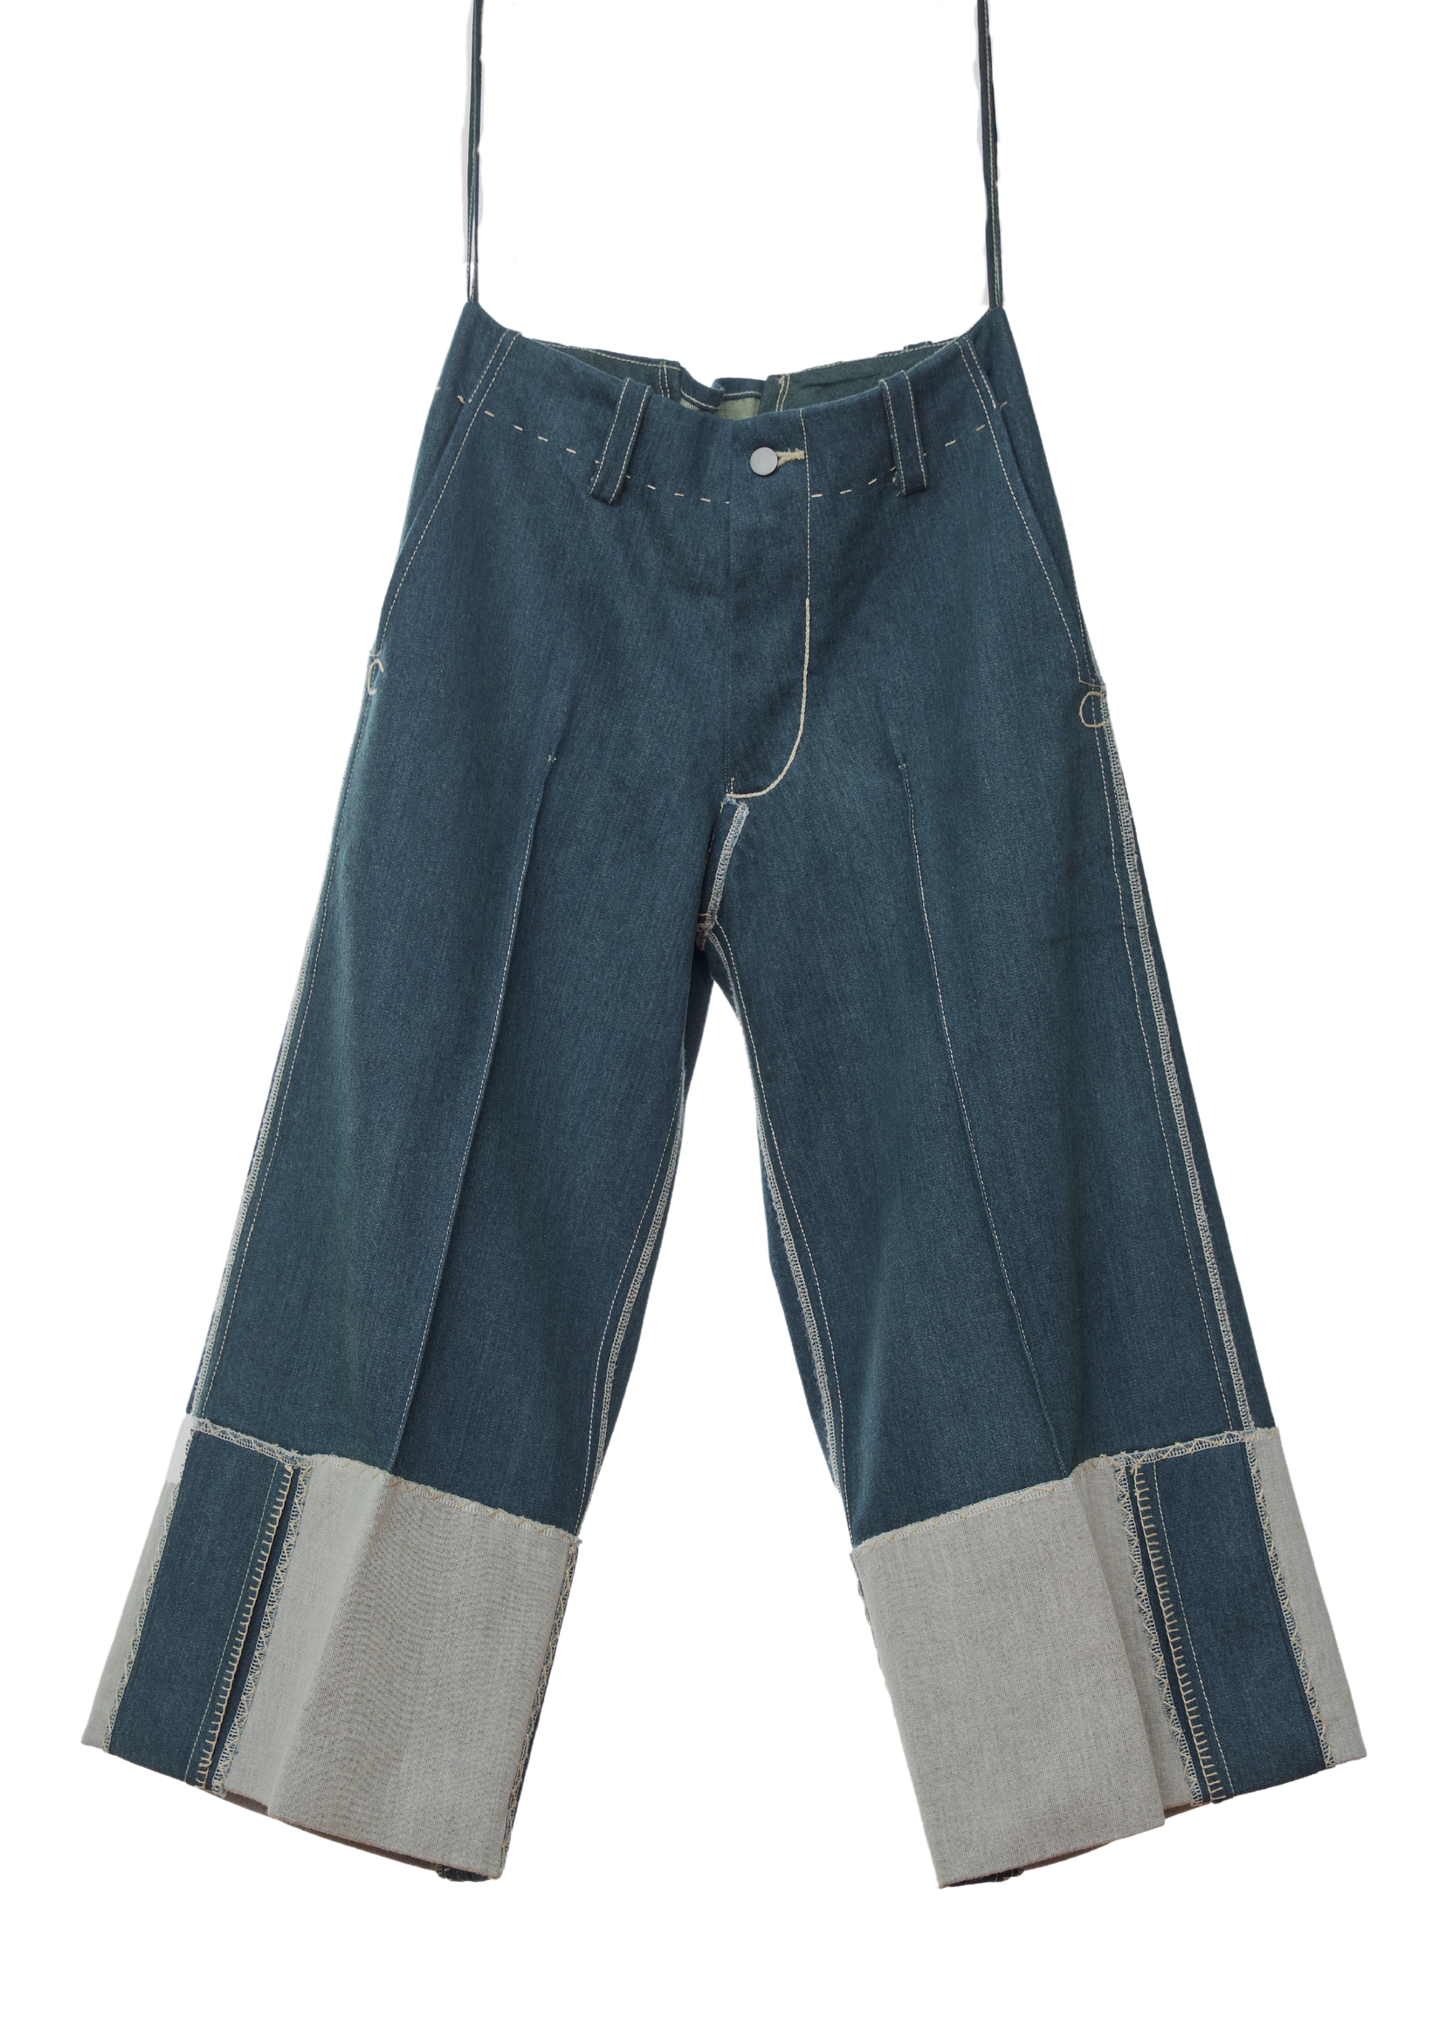 Liya Classic Cuffed Jeans in Ed.2 ✳︎